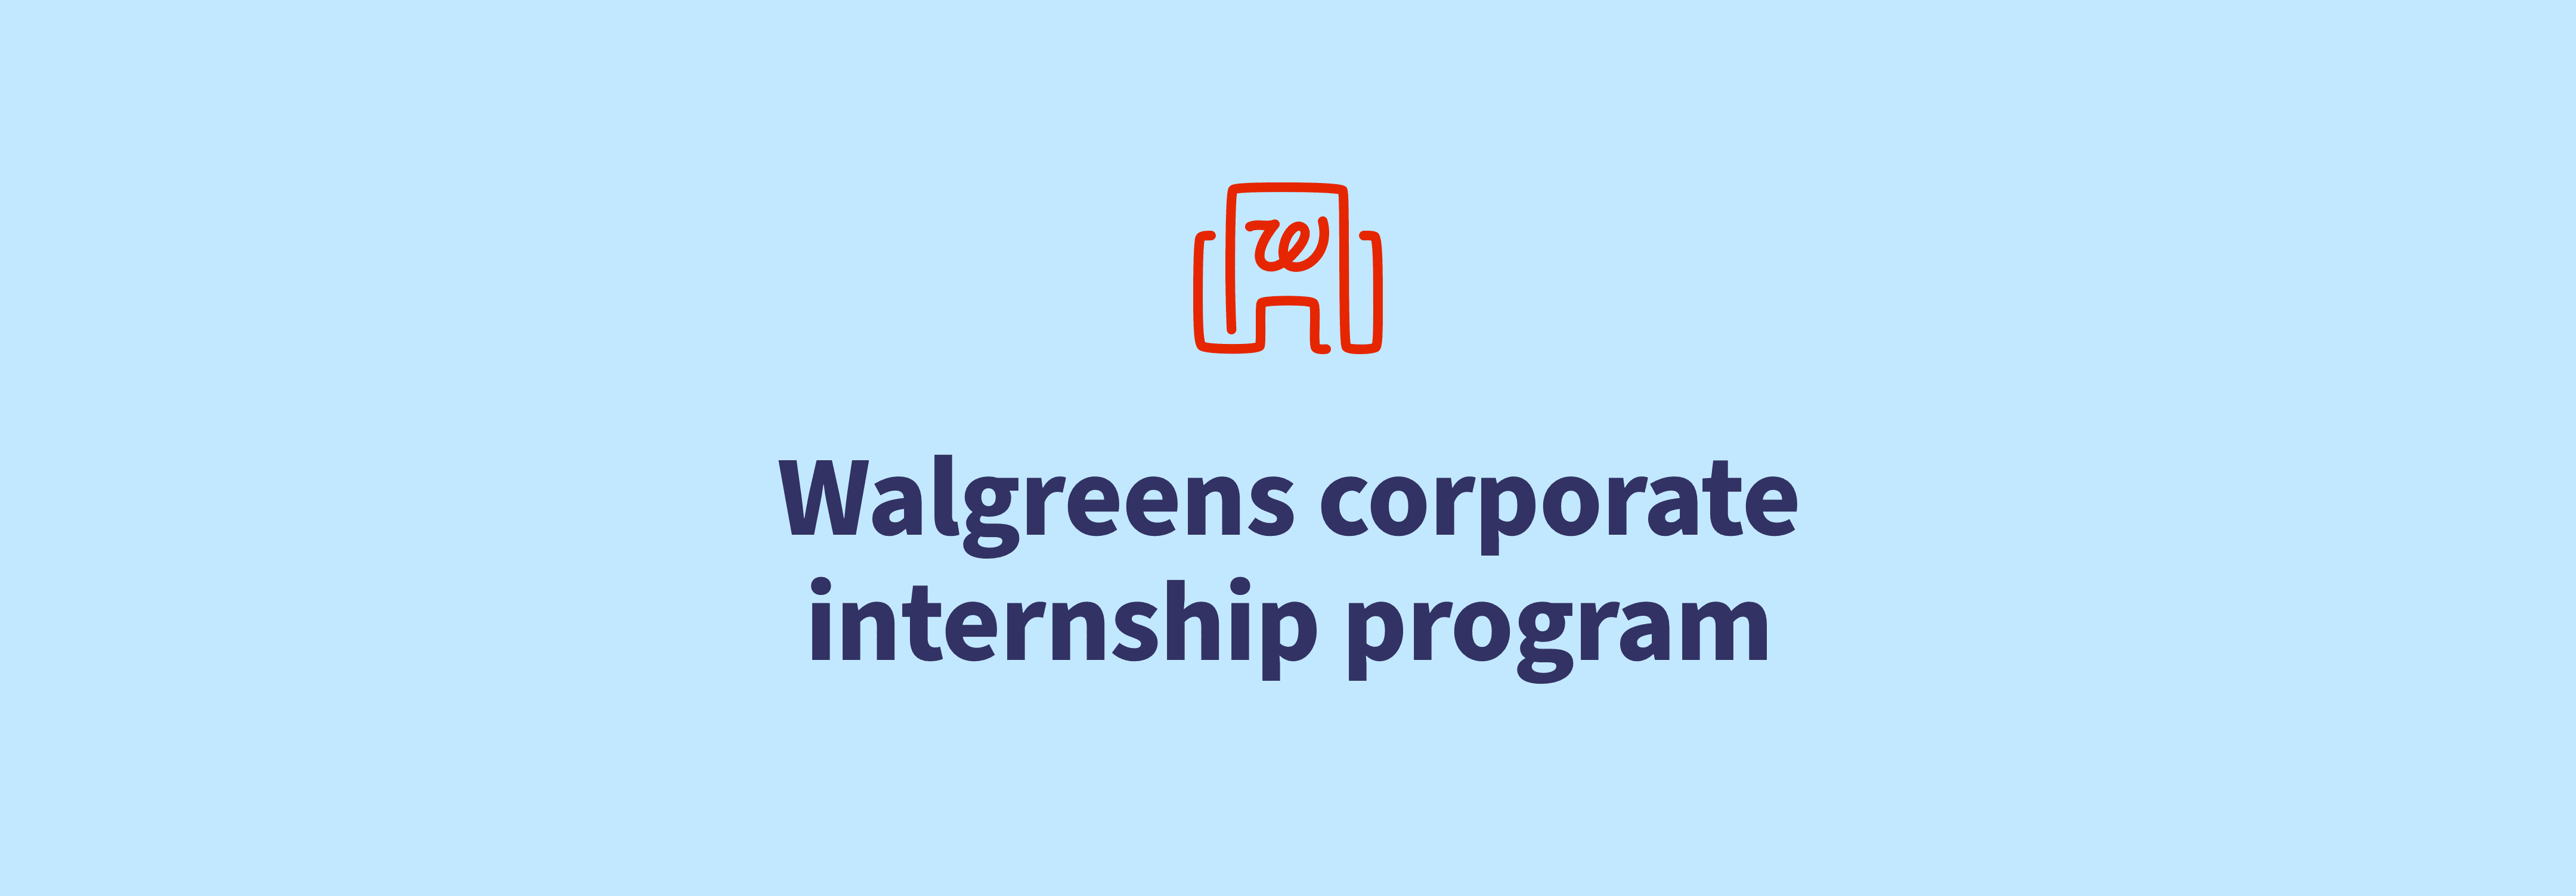 Video: Walgreens corporate internship program